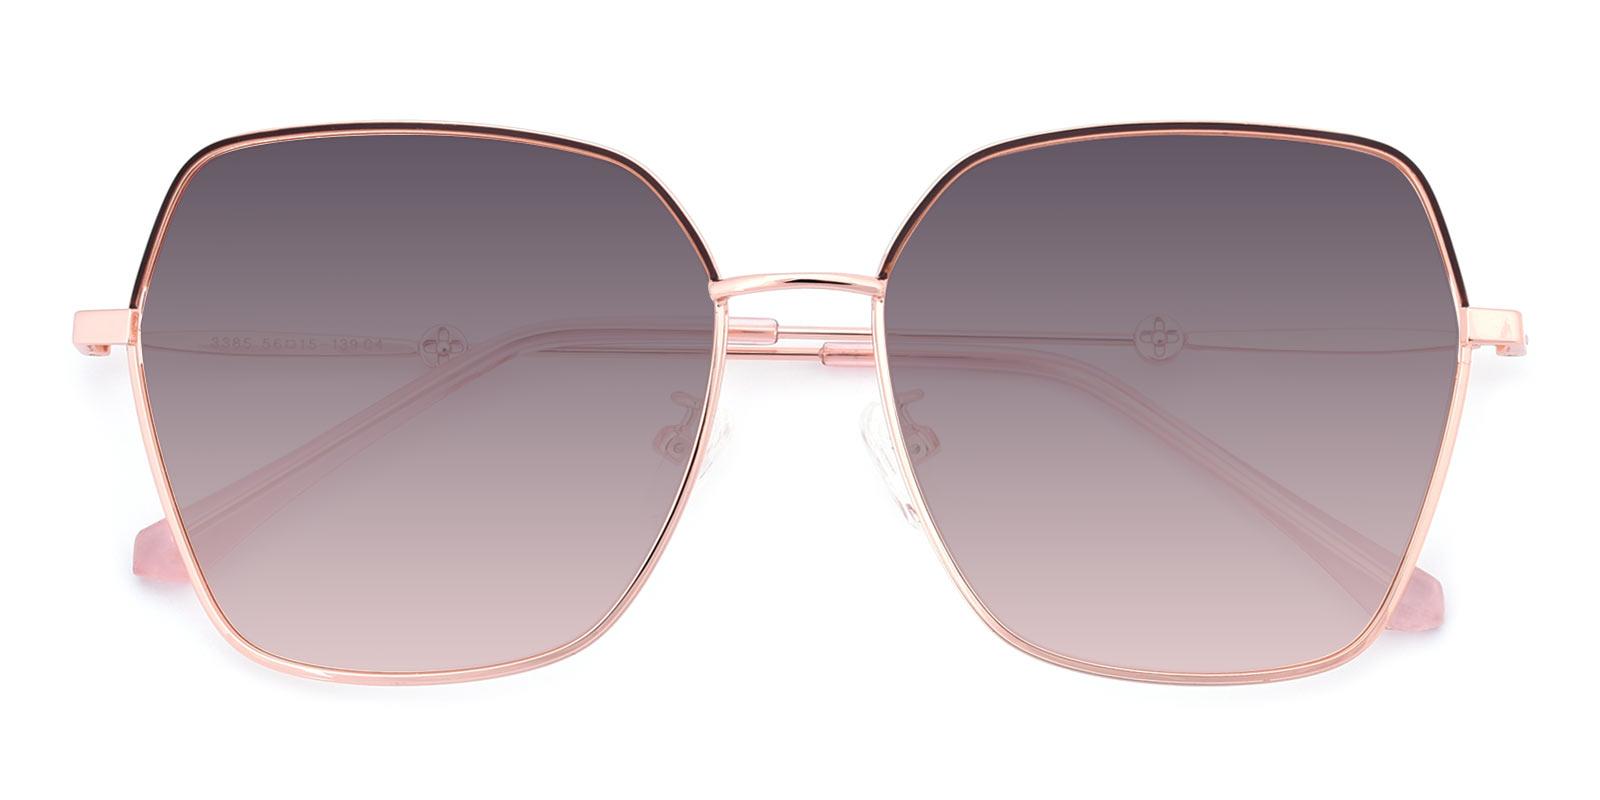 AfternoonTea-Pink-Square-Metal-Sunglasses-detail